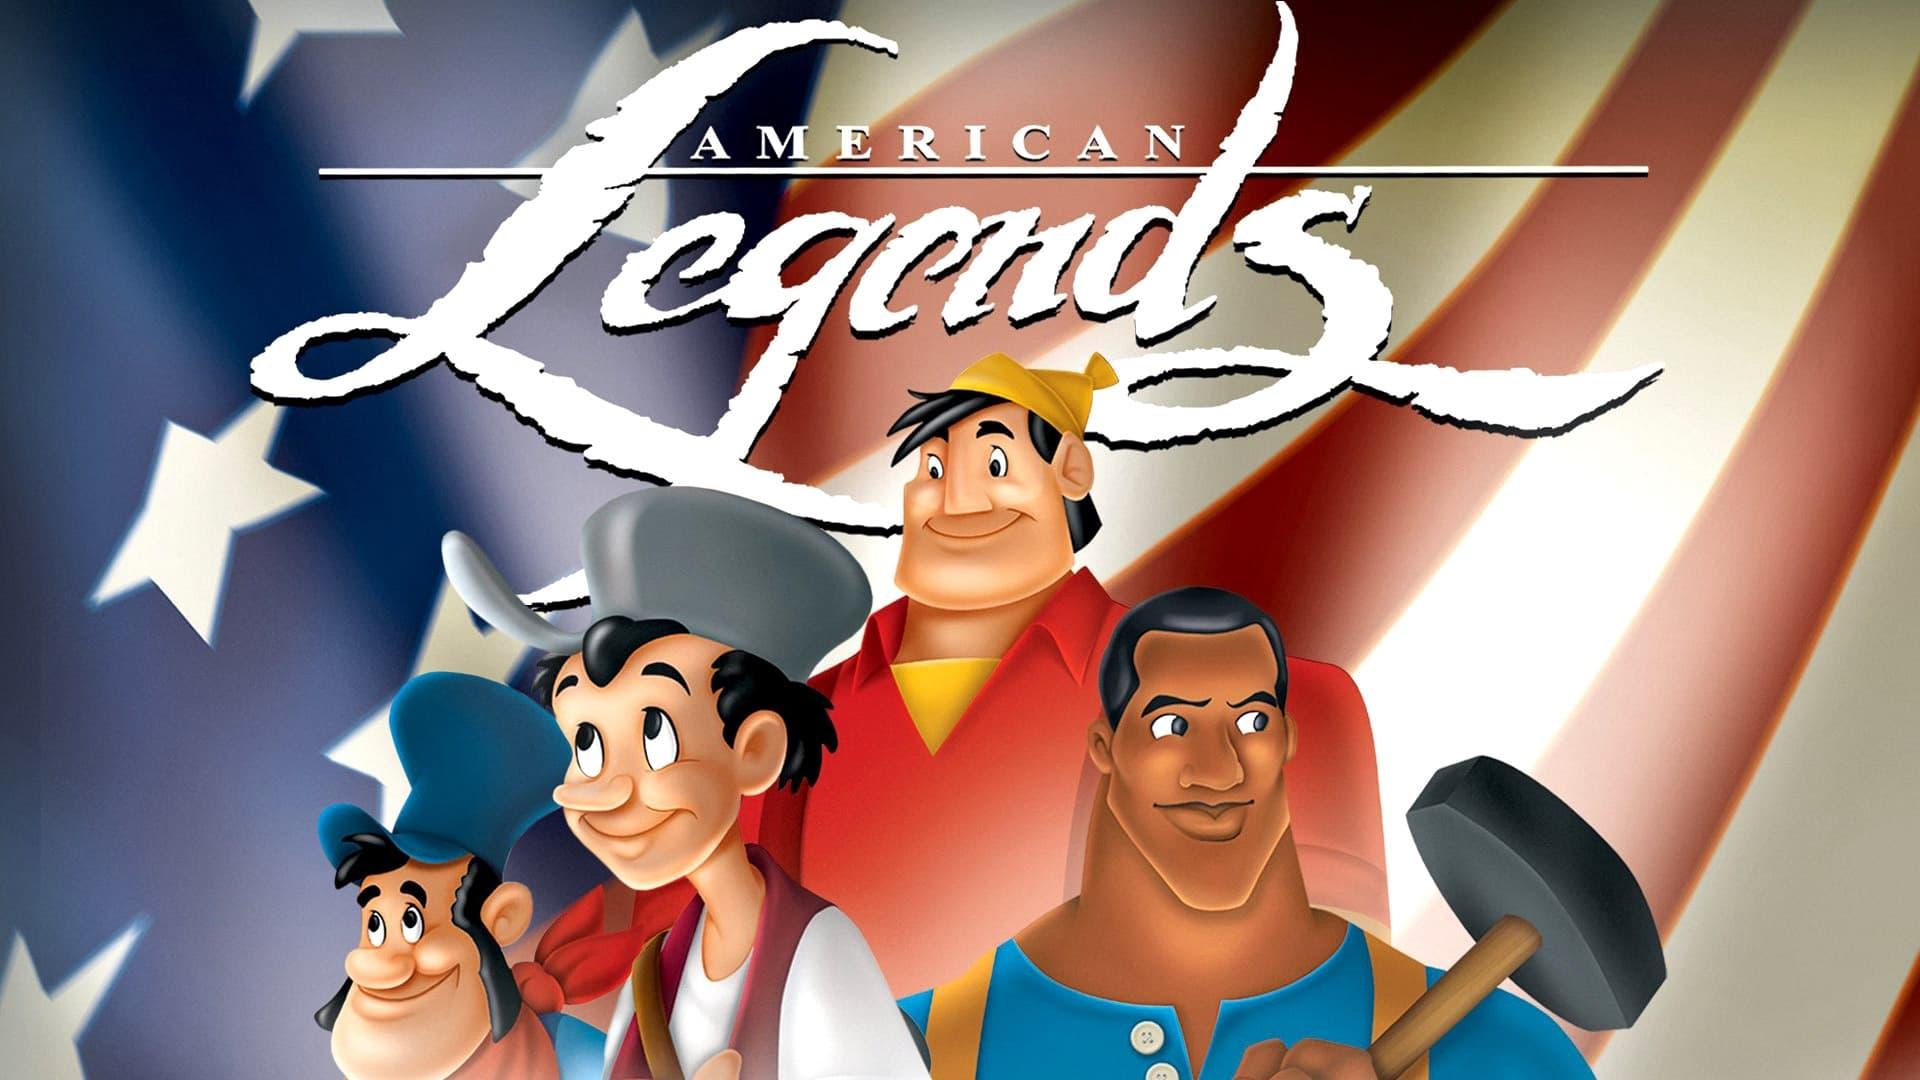 Disney's American Legends backdrop